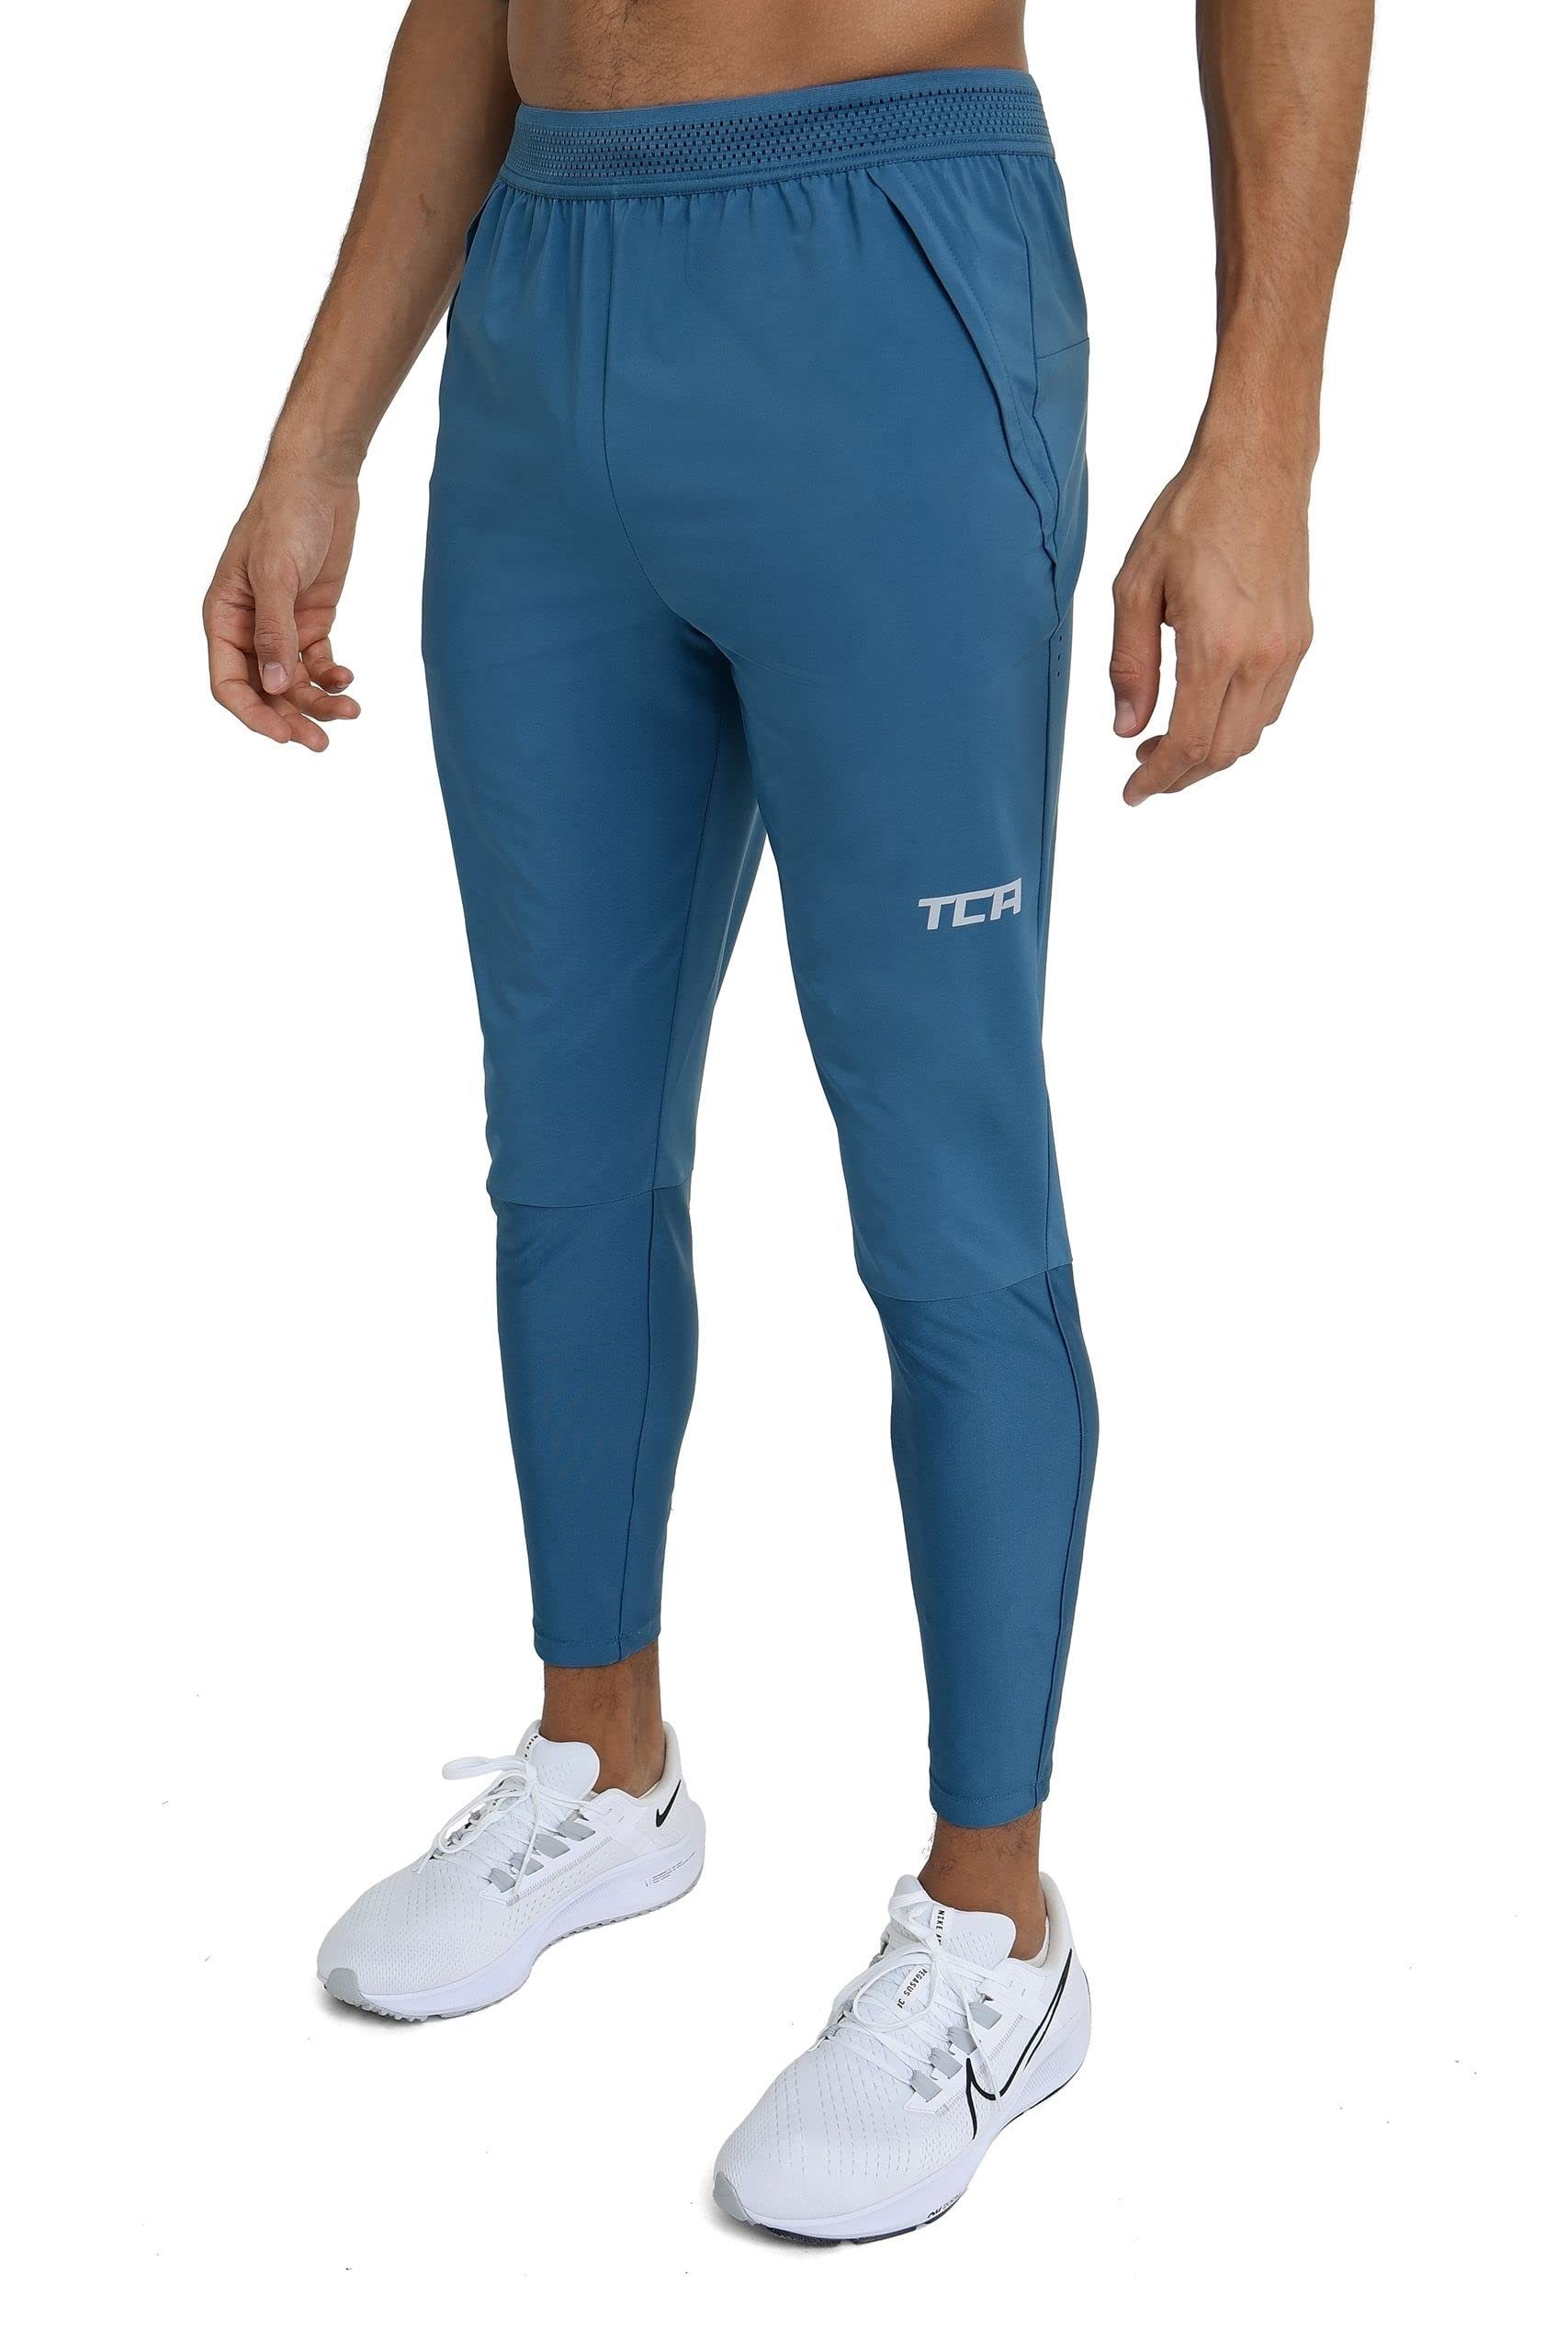 TCA Laufhose TCA Herren Jogginghose mit Reißverschlusstaschen - Blau